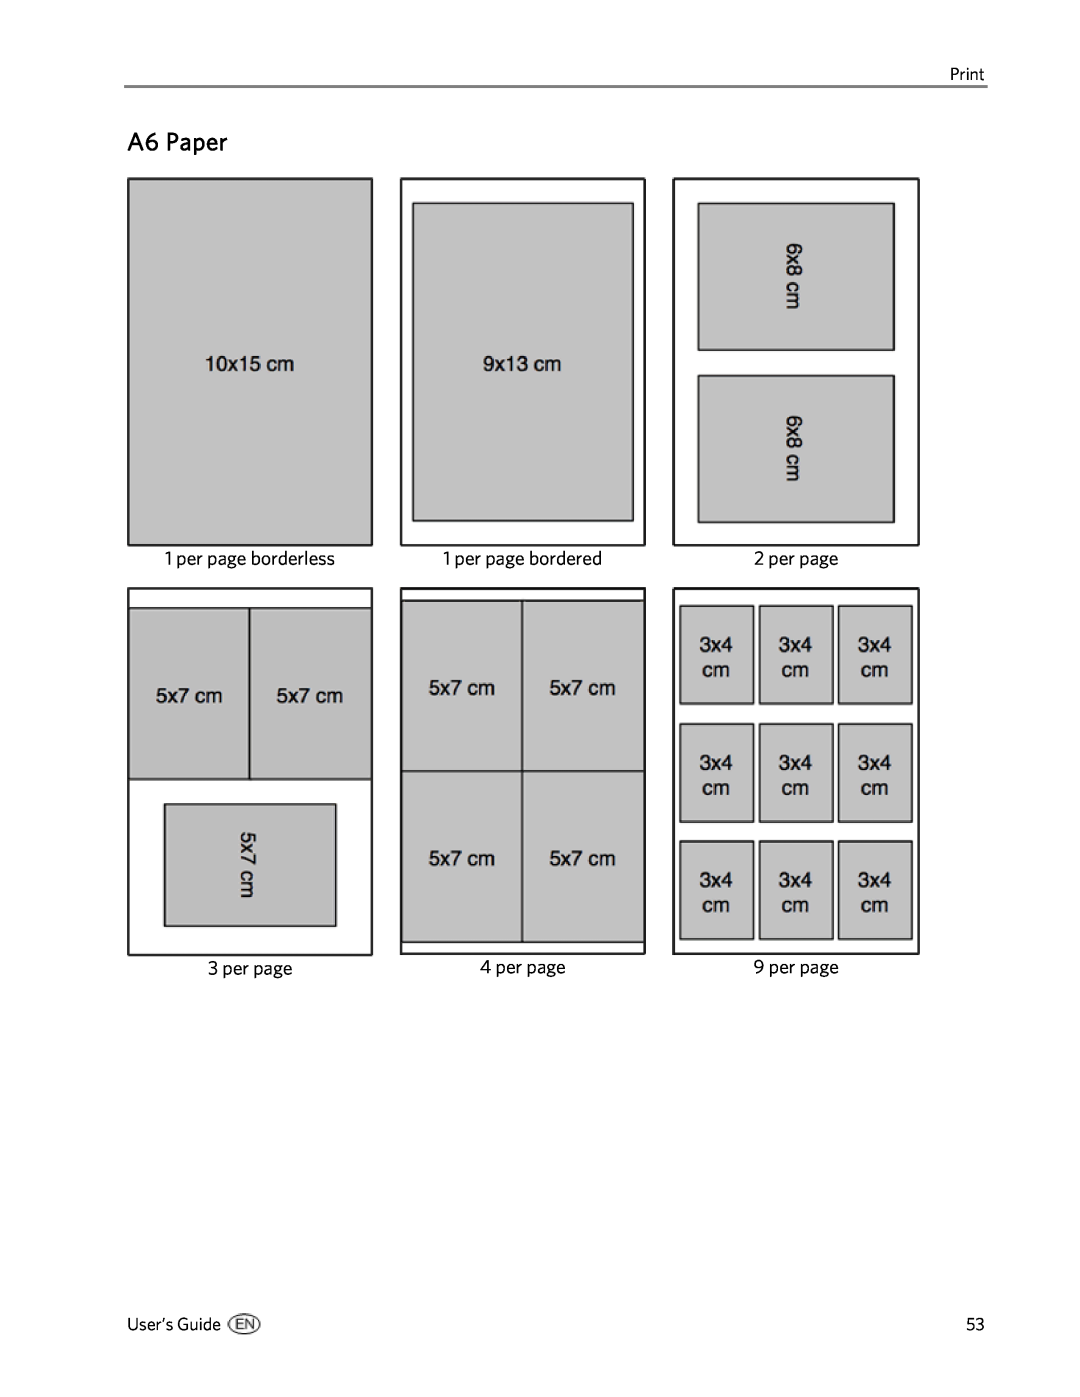 Kodak 5500 manual A6 Paper, Print, per page, User’s Guide 